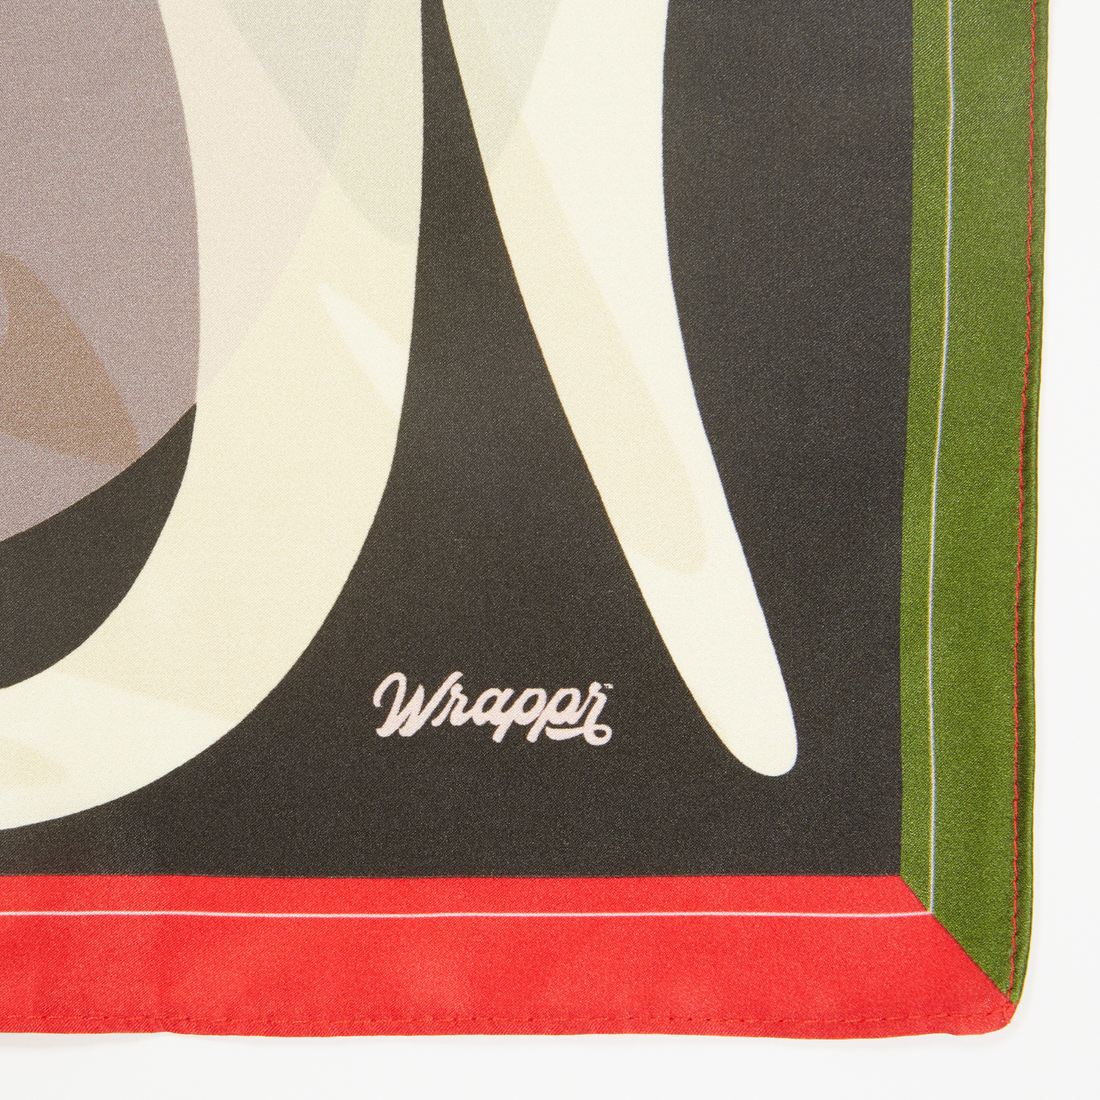 Patient Season | 28" Furoshiki Gift Wrap by Essery Waller